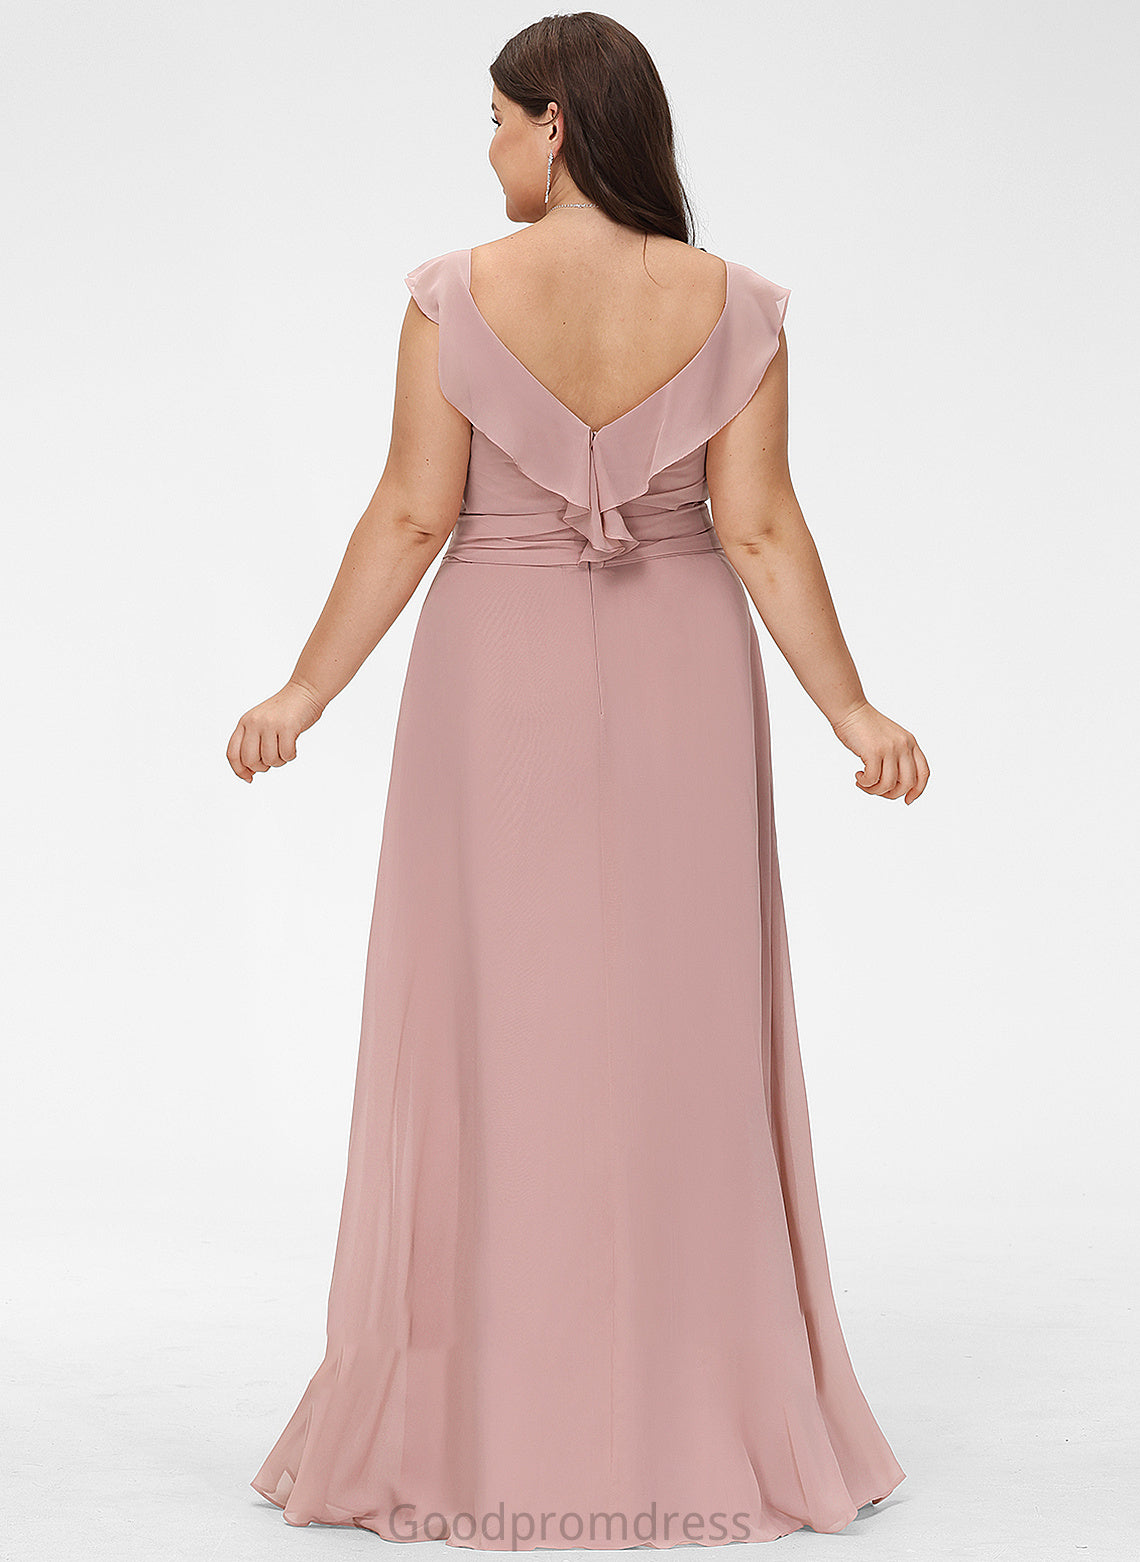 Empire Floor-Length Chiffon Ciara Prom Dresses Cascading Ruffles V-neck With